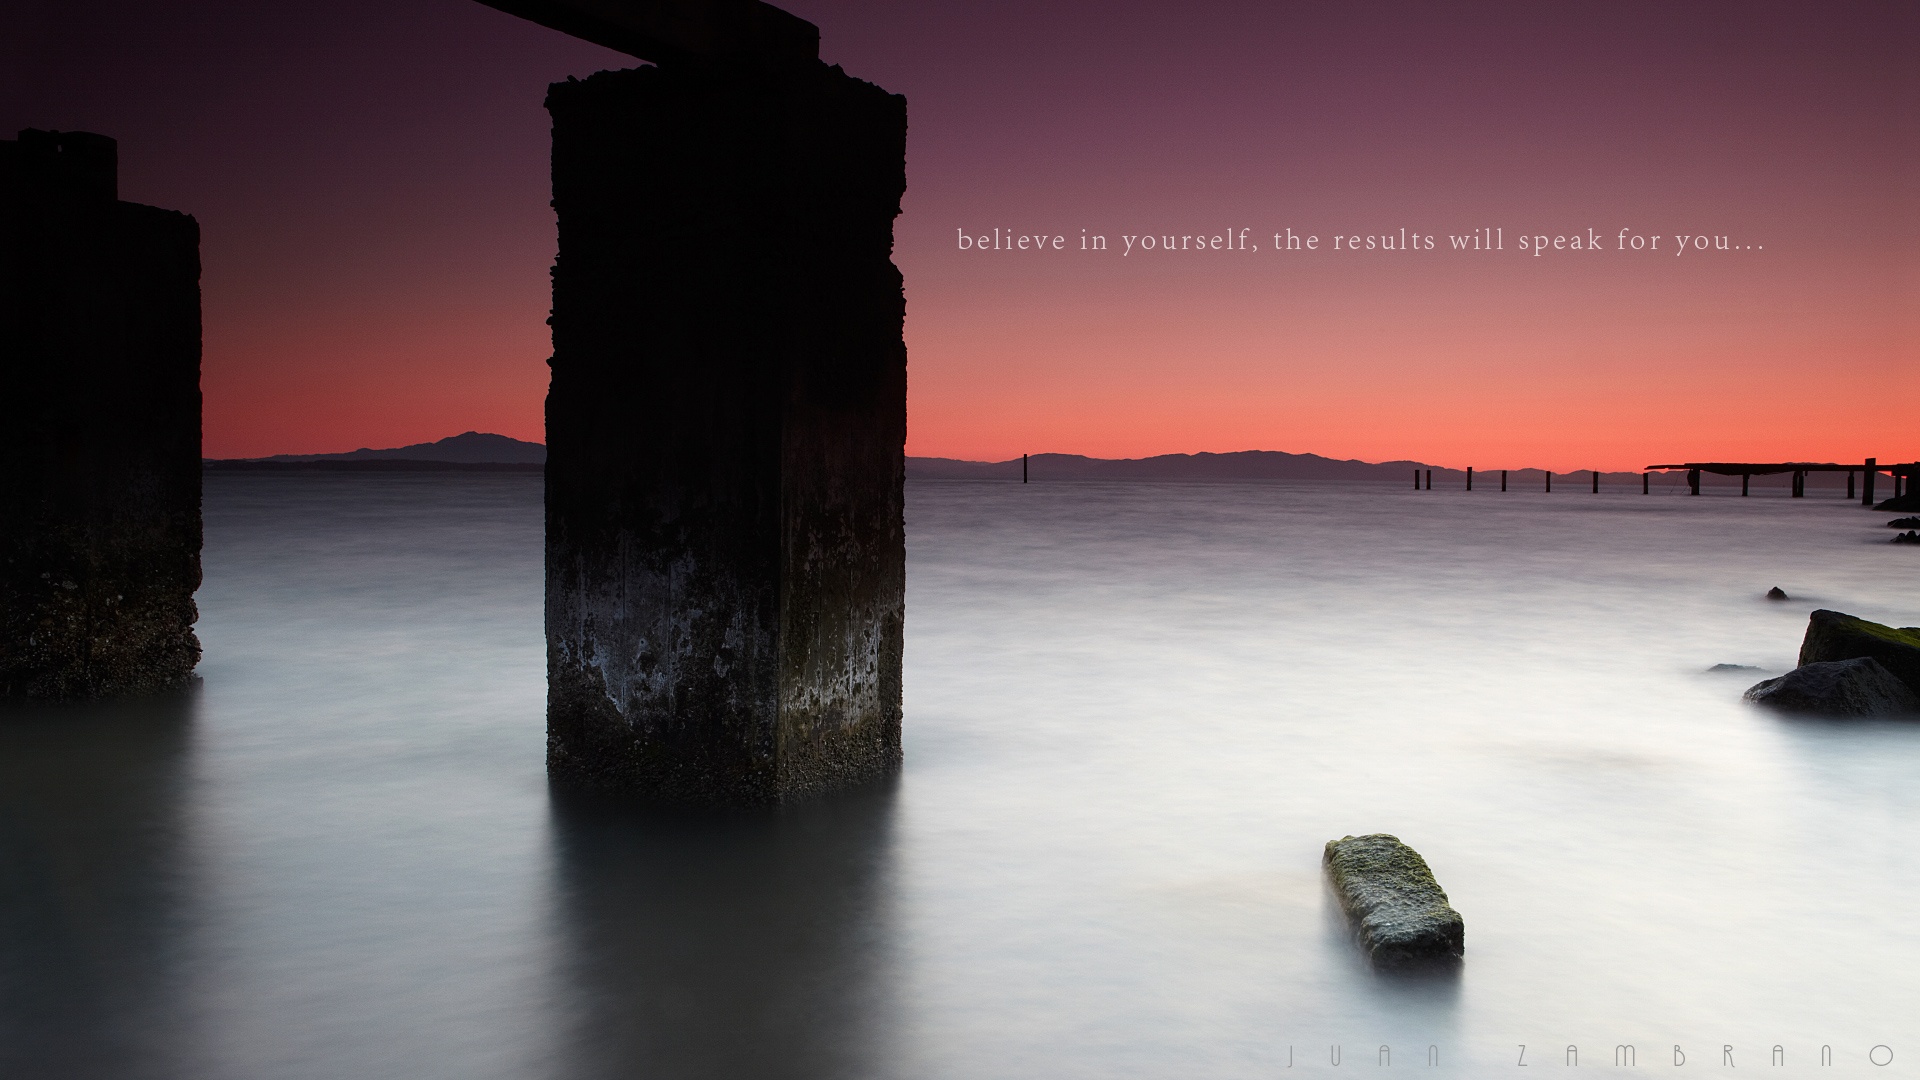 Motivational Life Quotes Wallpaper And Desktop Background Background For Desktop Inspirational Quotes